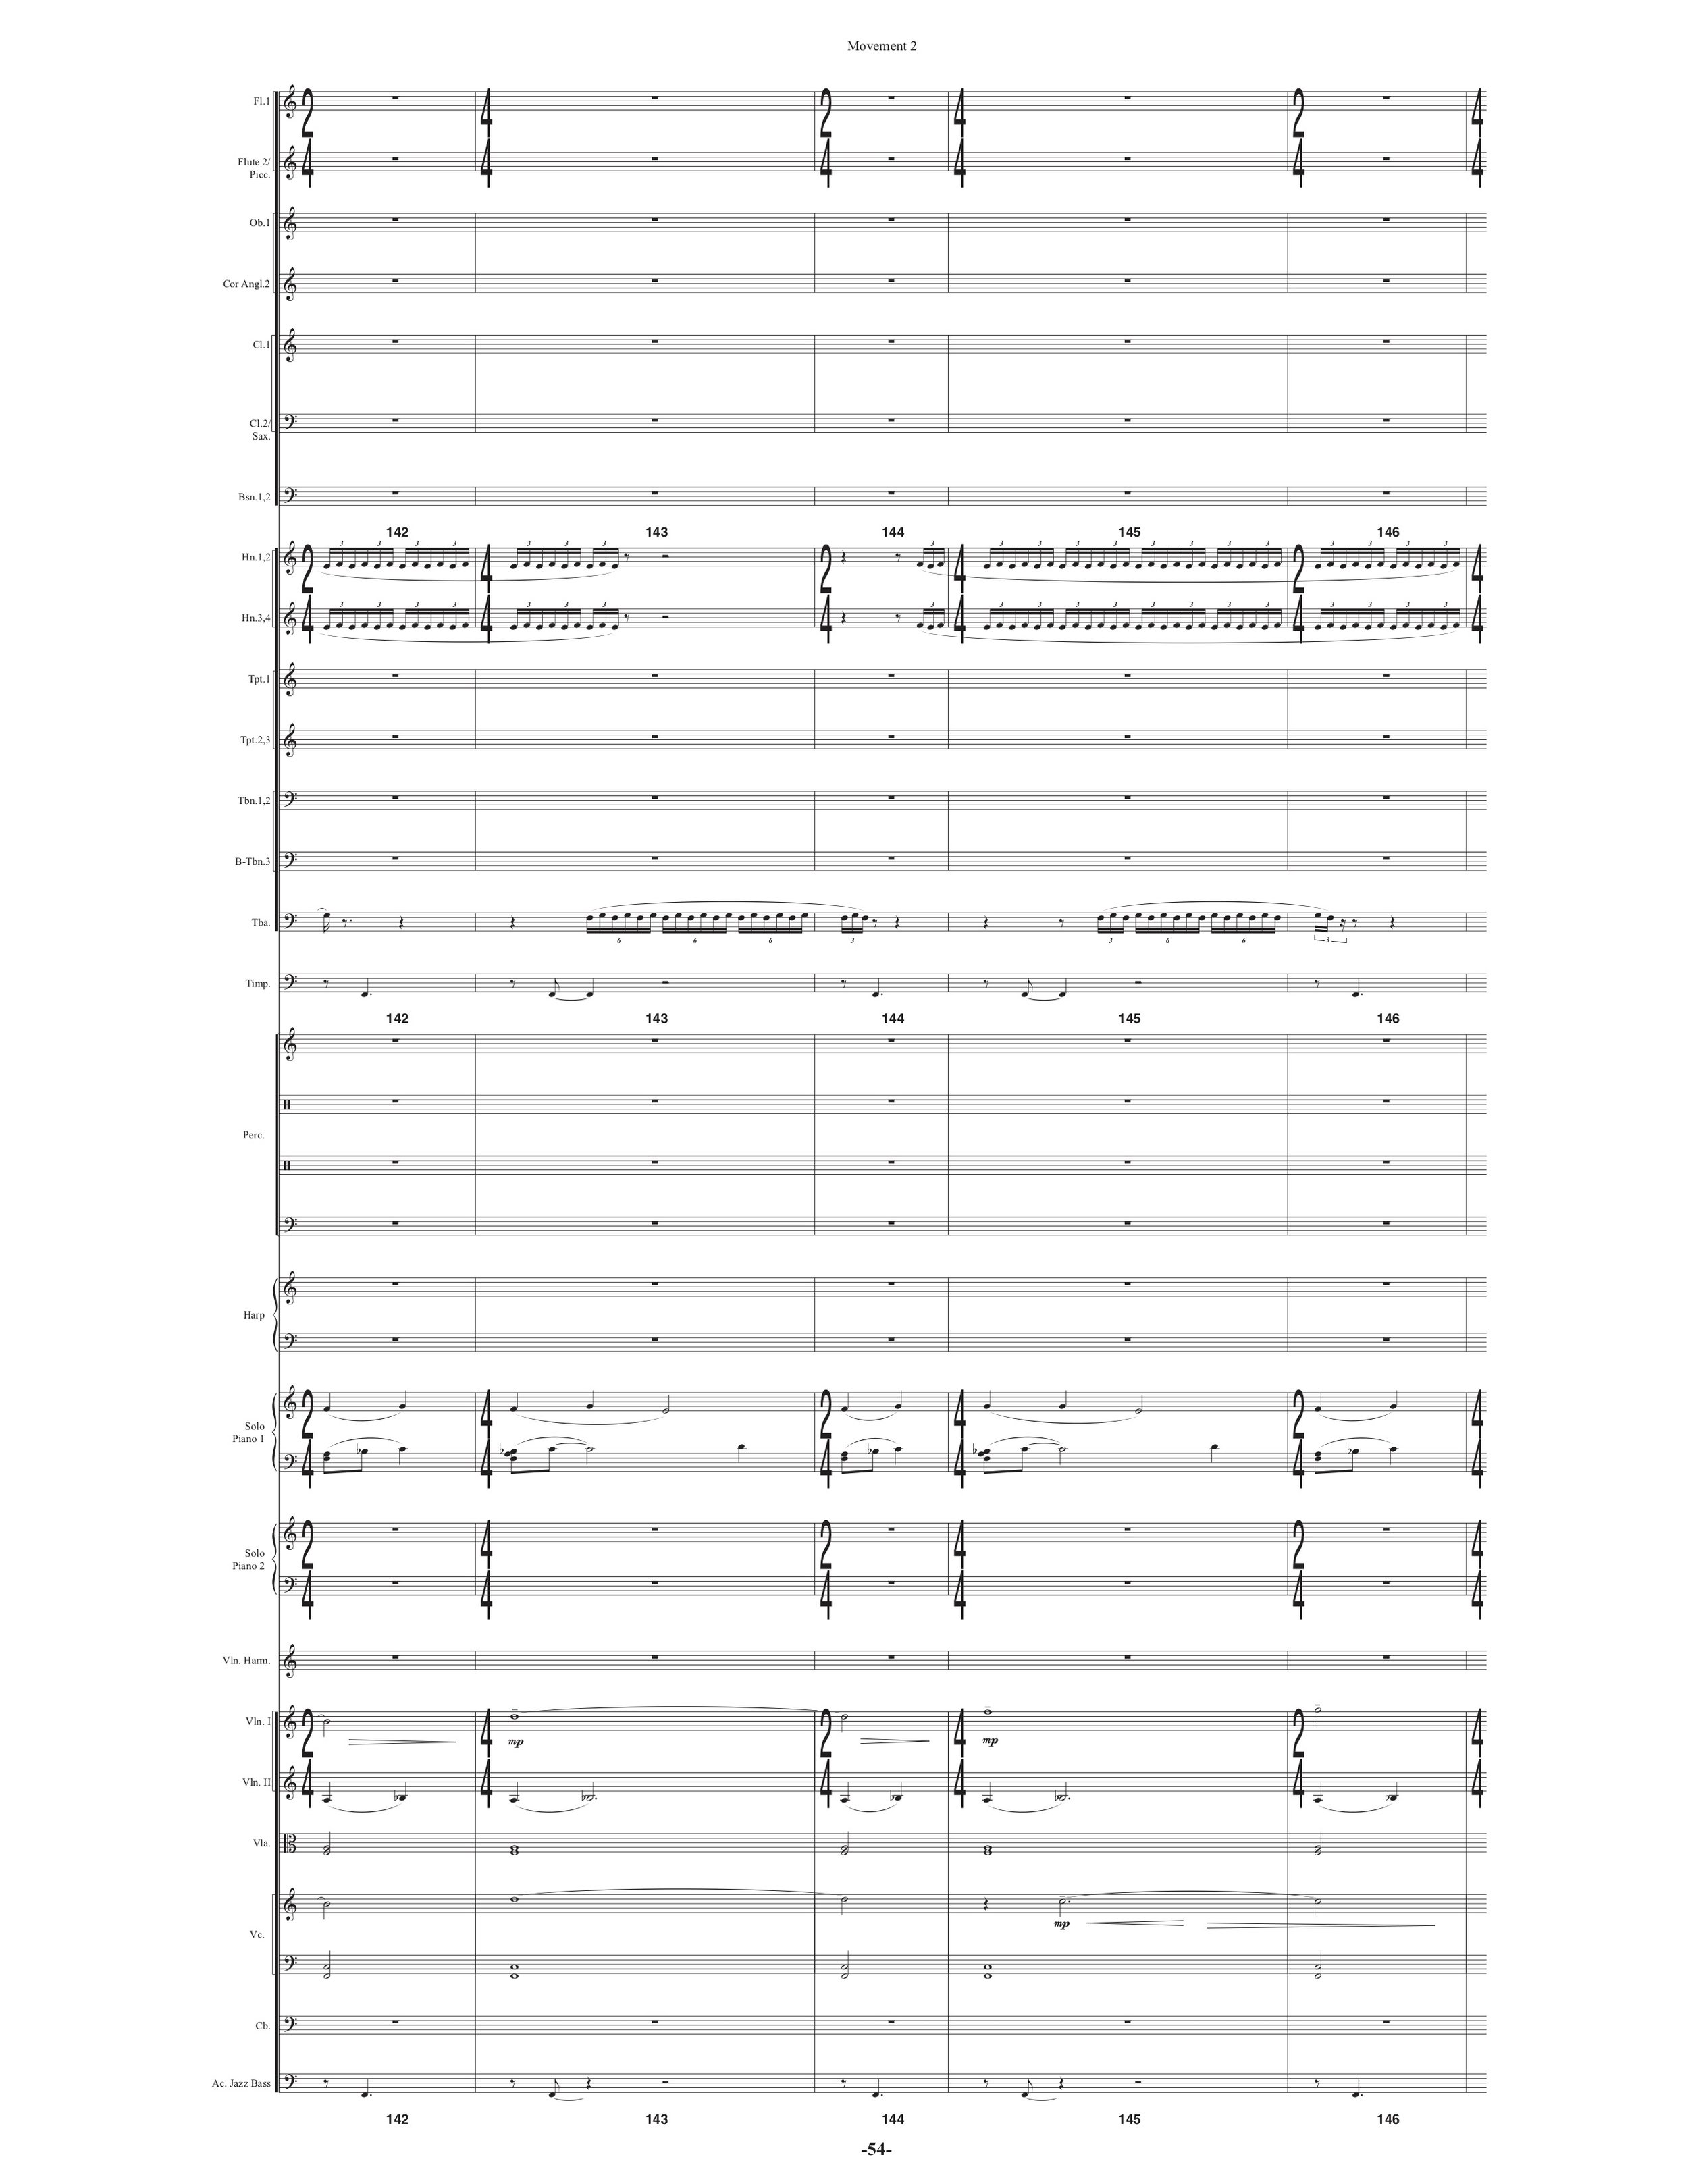 Symphony_Orch & 2 Pianos p59.jpg